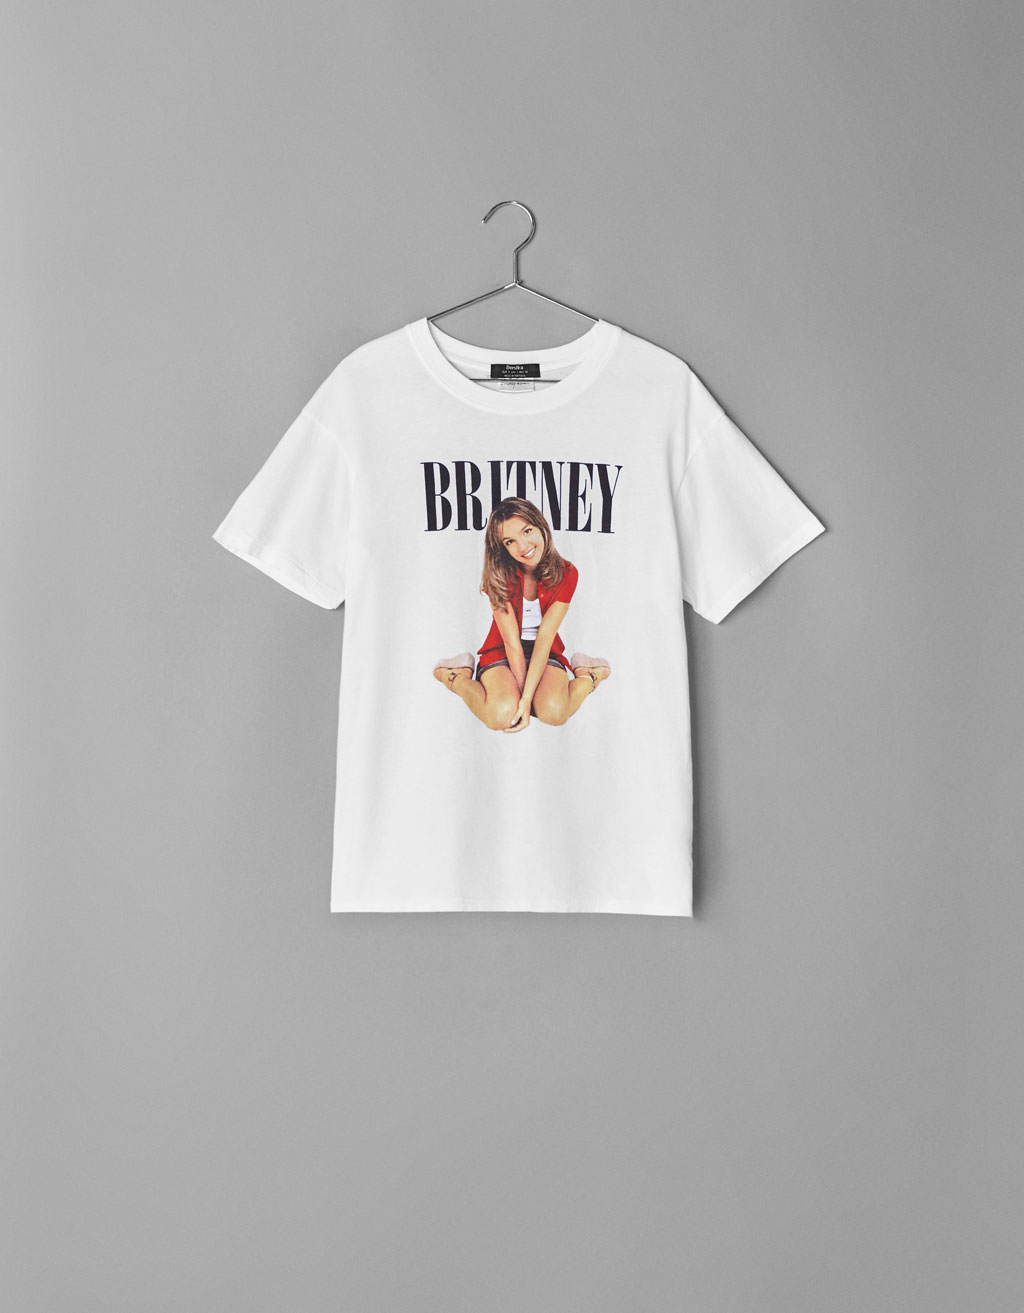 Britney T-shirt on Bershka - The Britney Spears Community - Exhale